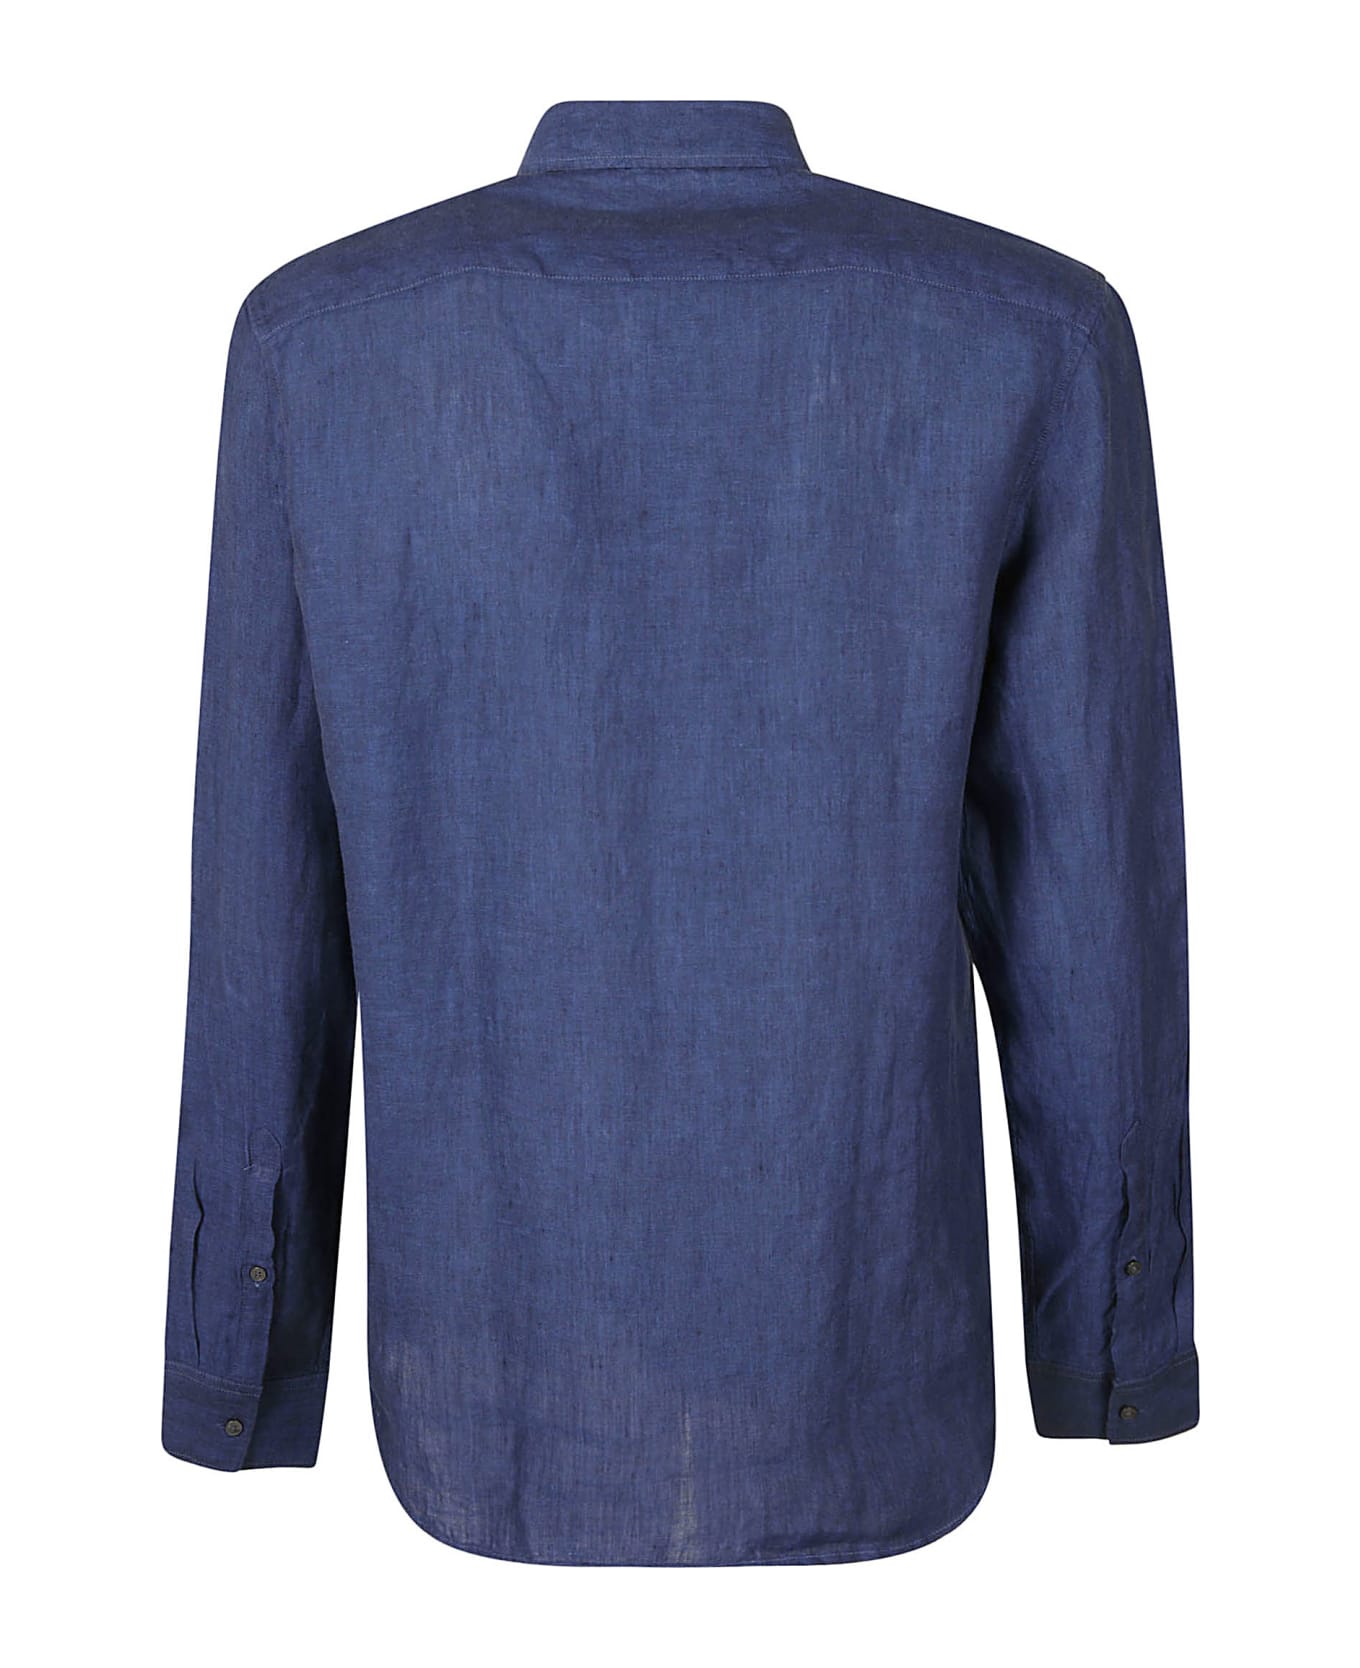 Michael Kors Long-sleeved Shirt - NAVY